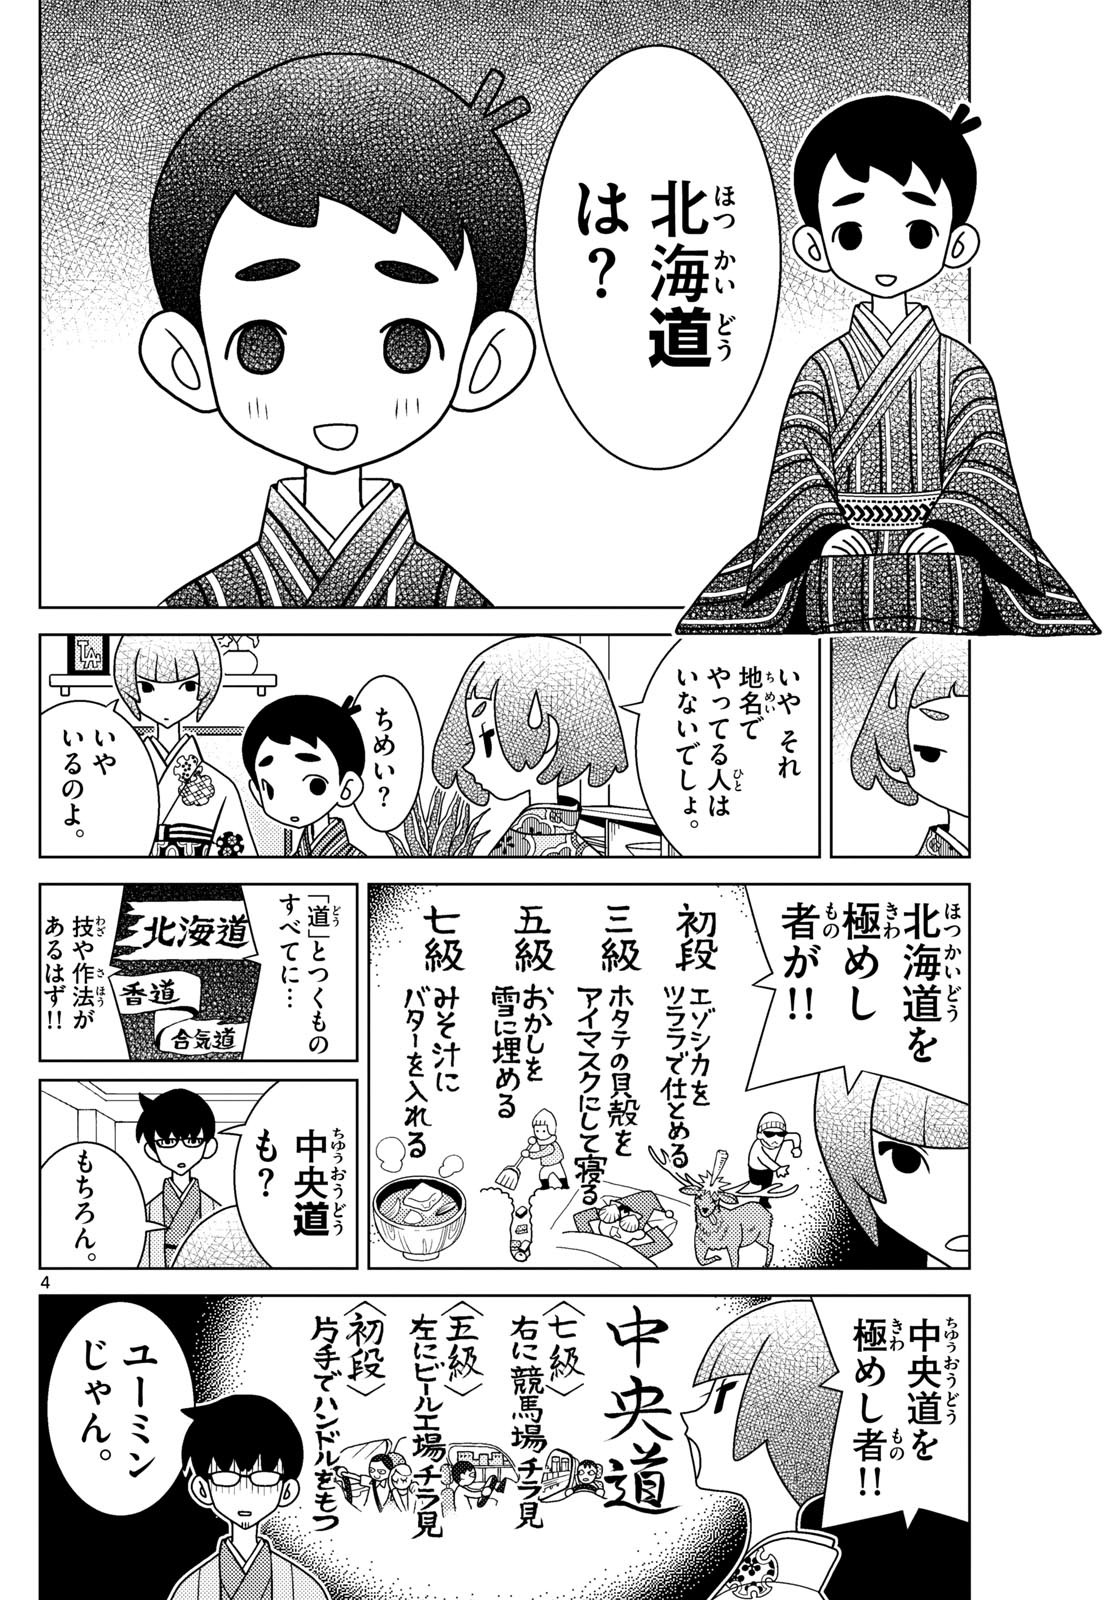 Shibuya Near Family - Chapter 081 - Page 4